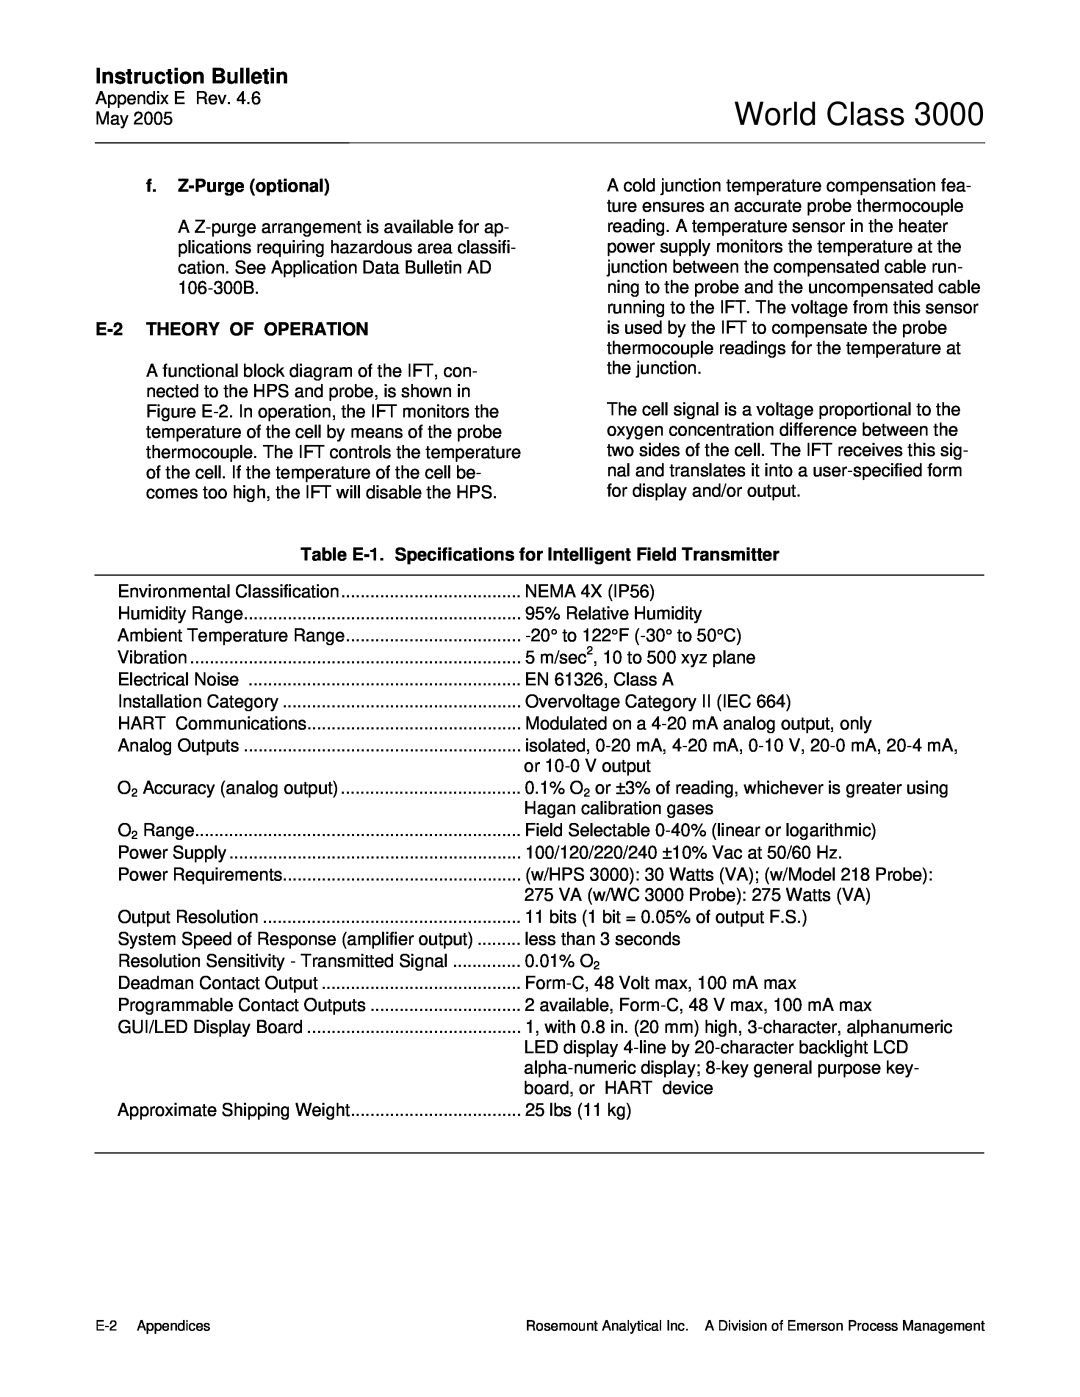 Emerson 3000 instruction manual World Class, Instruction Bulletin, f.Z-Purgeoptional, E-2THEORY OF OPERATION 